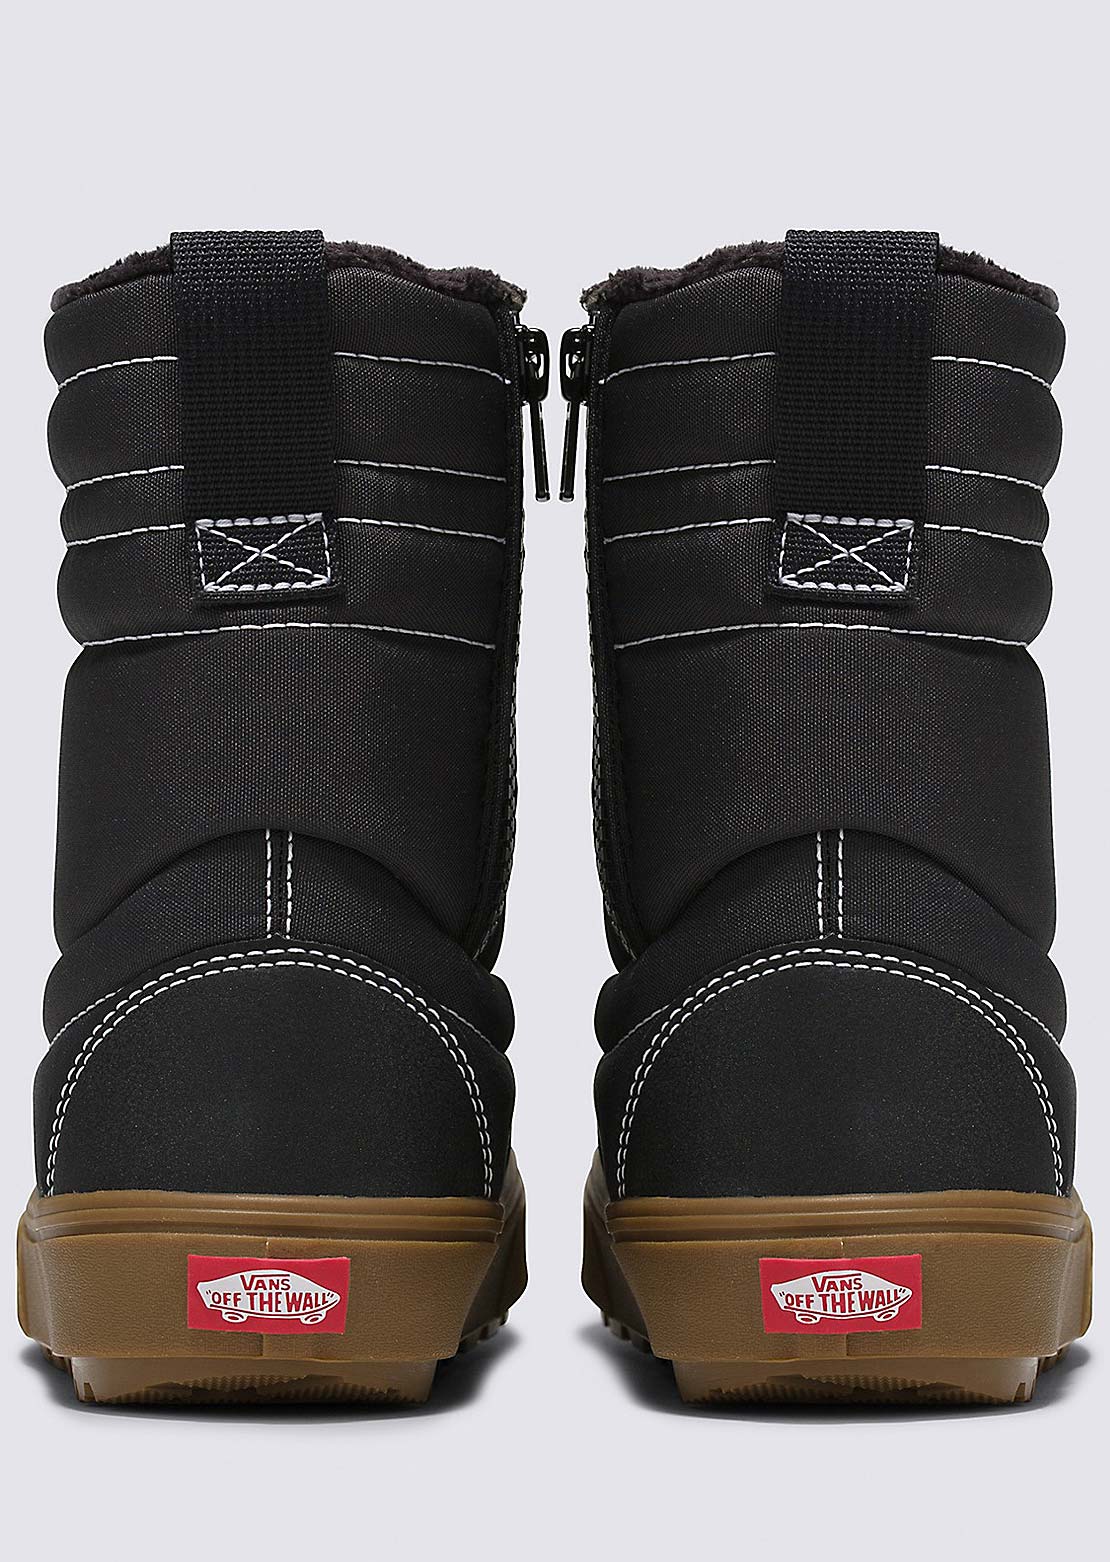 Vans Junior Vansguard Slip-On Snow Boots Black/Gum